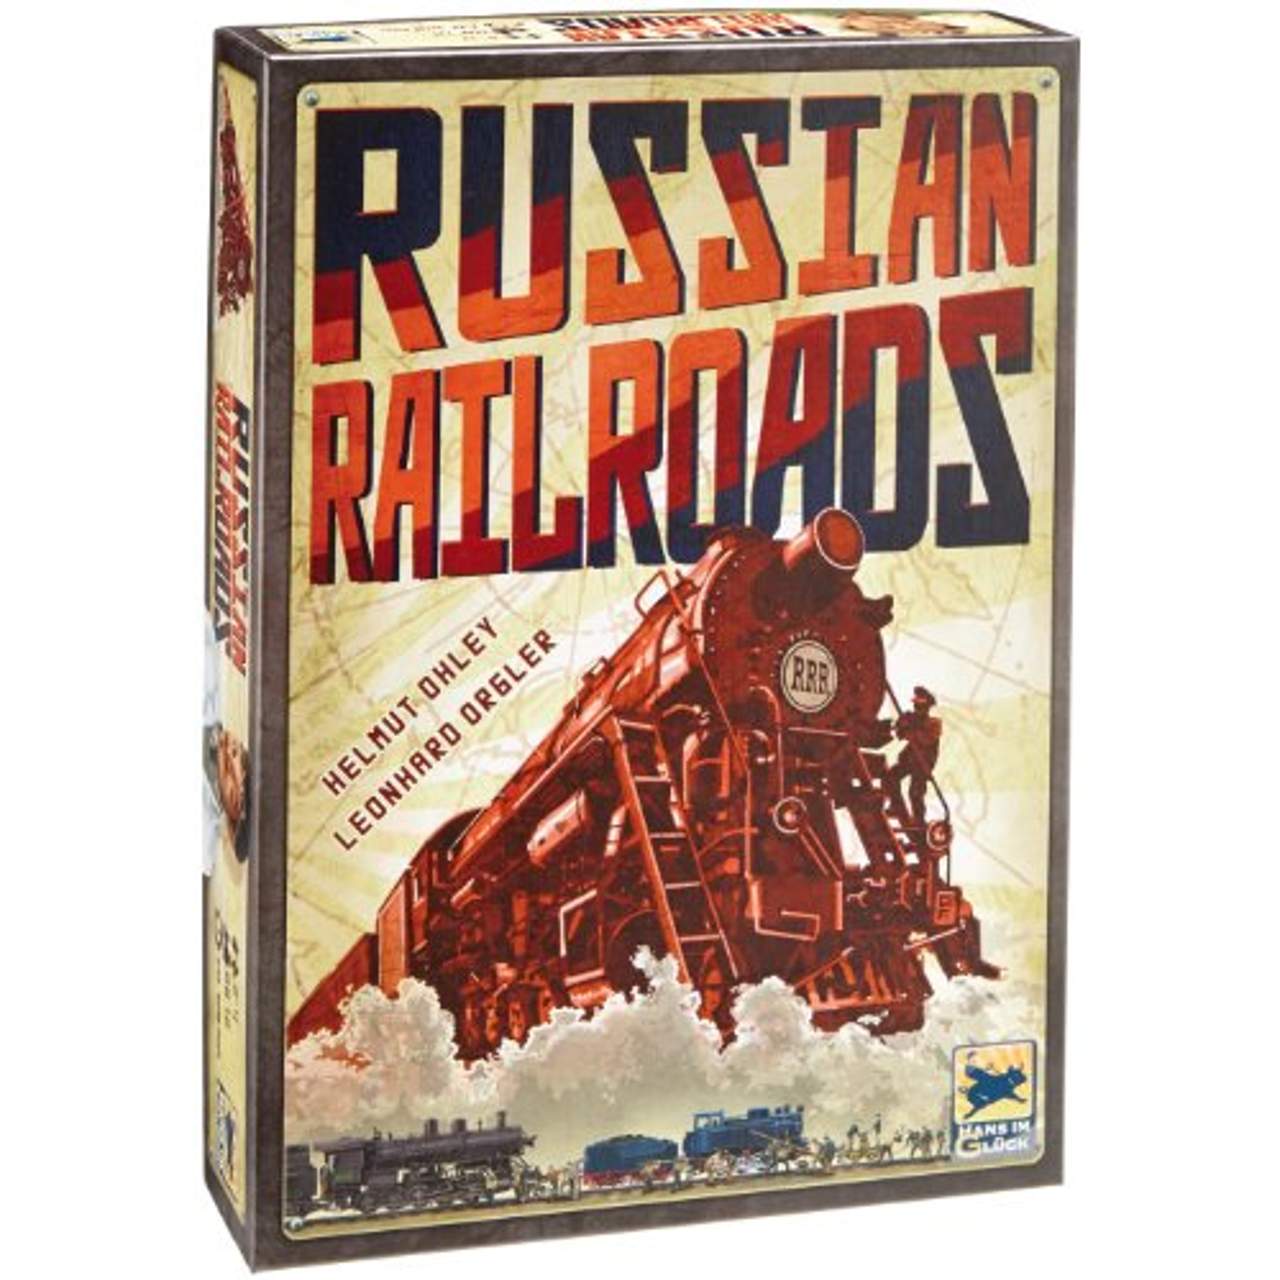 Hans im Glück, Russian Railroads